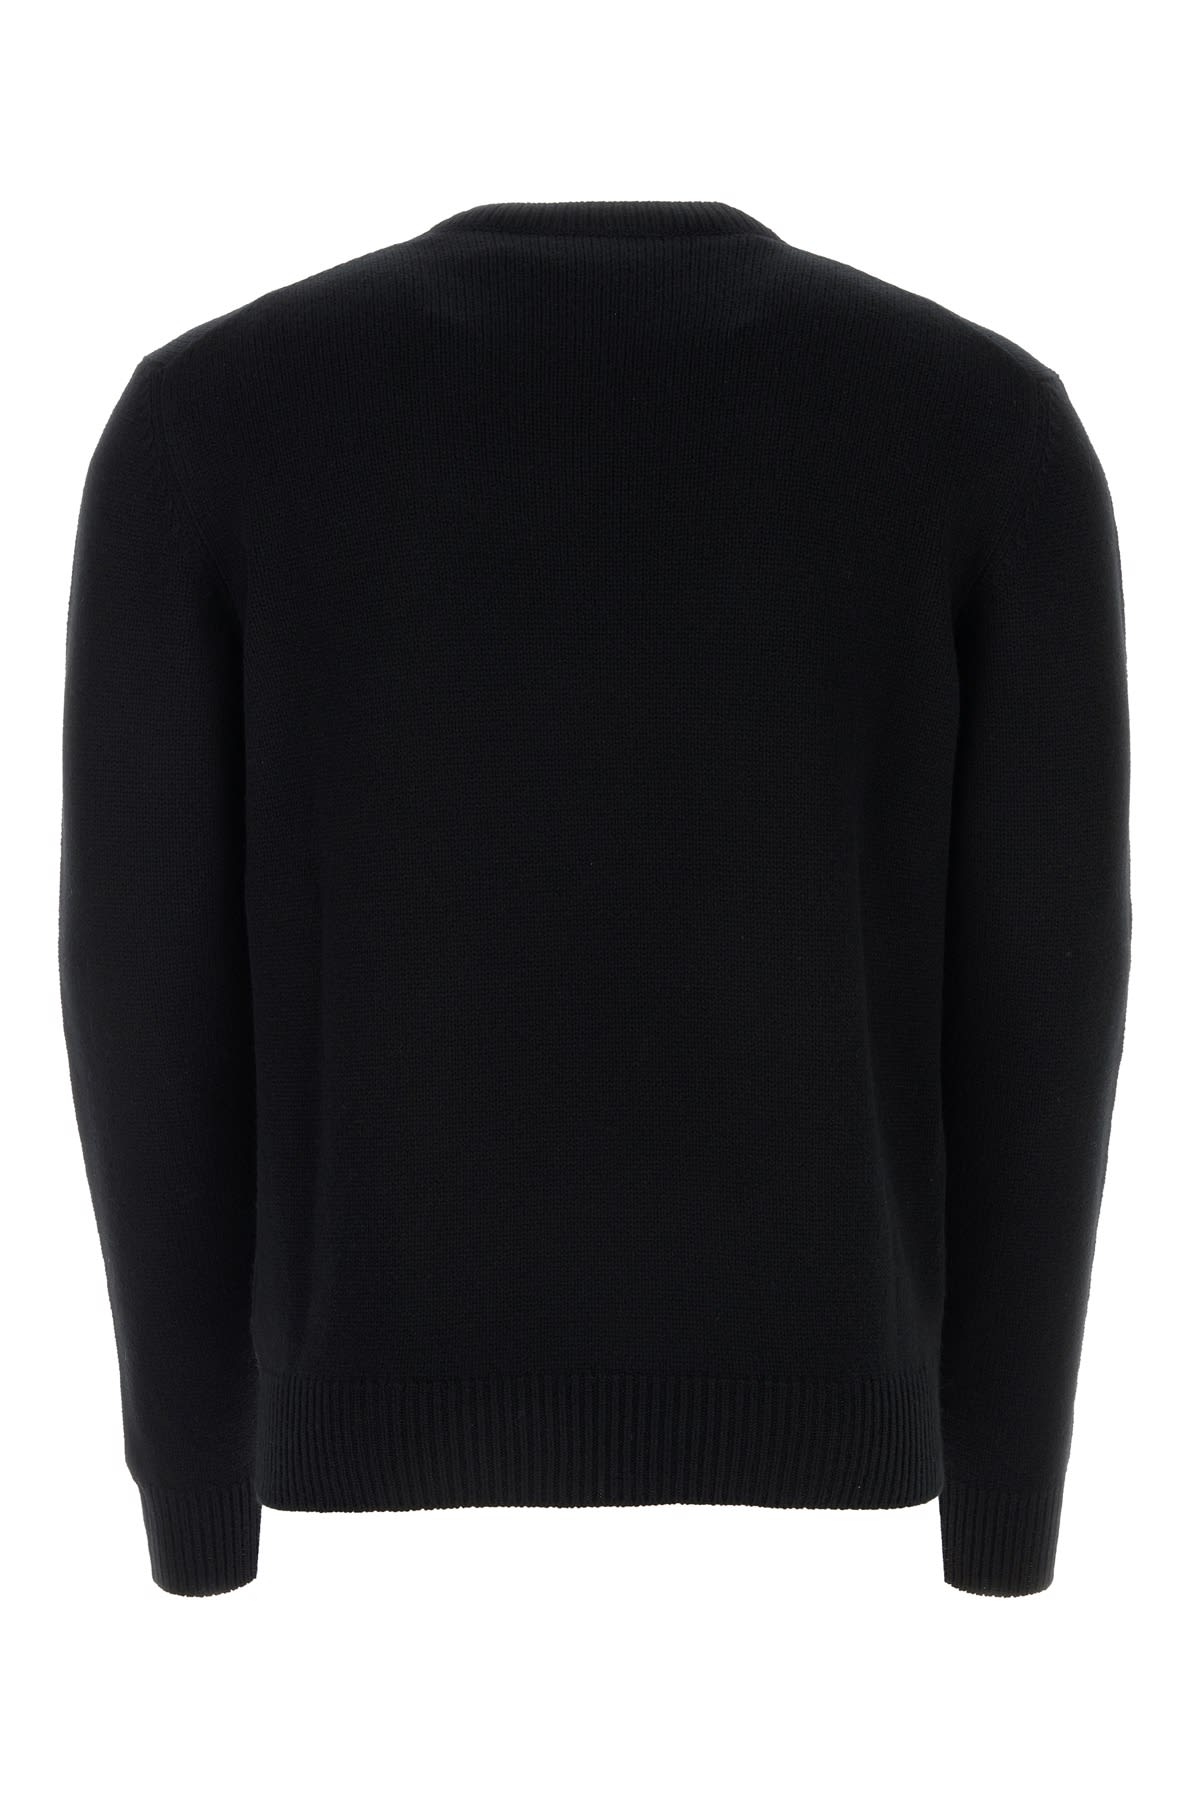 Prada Black Cashmere Sweater In Nero